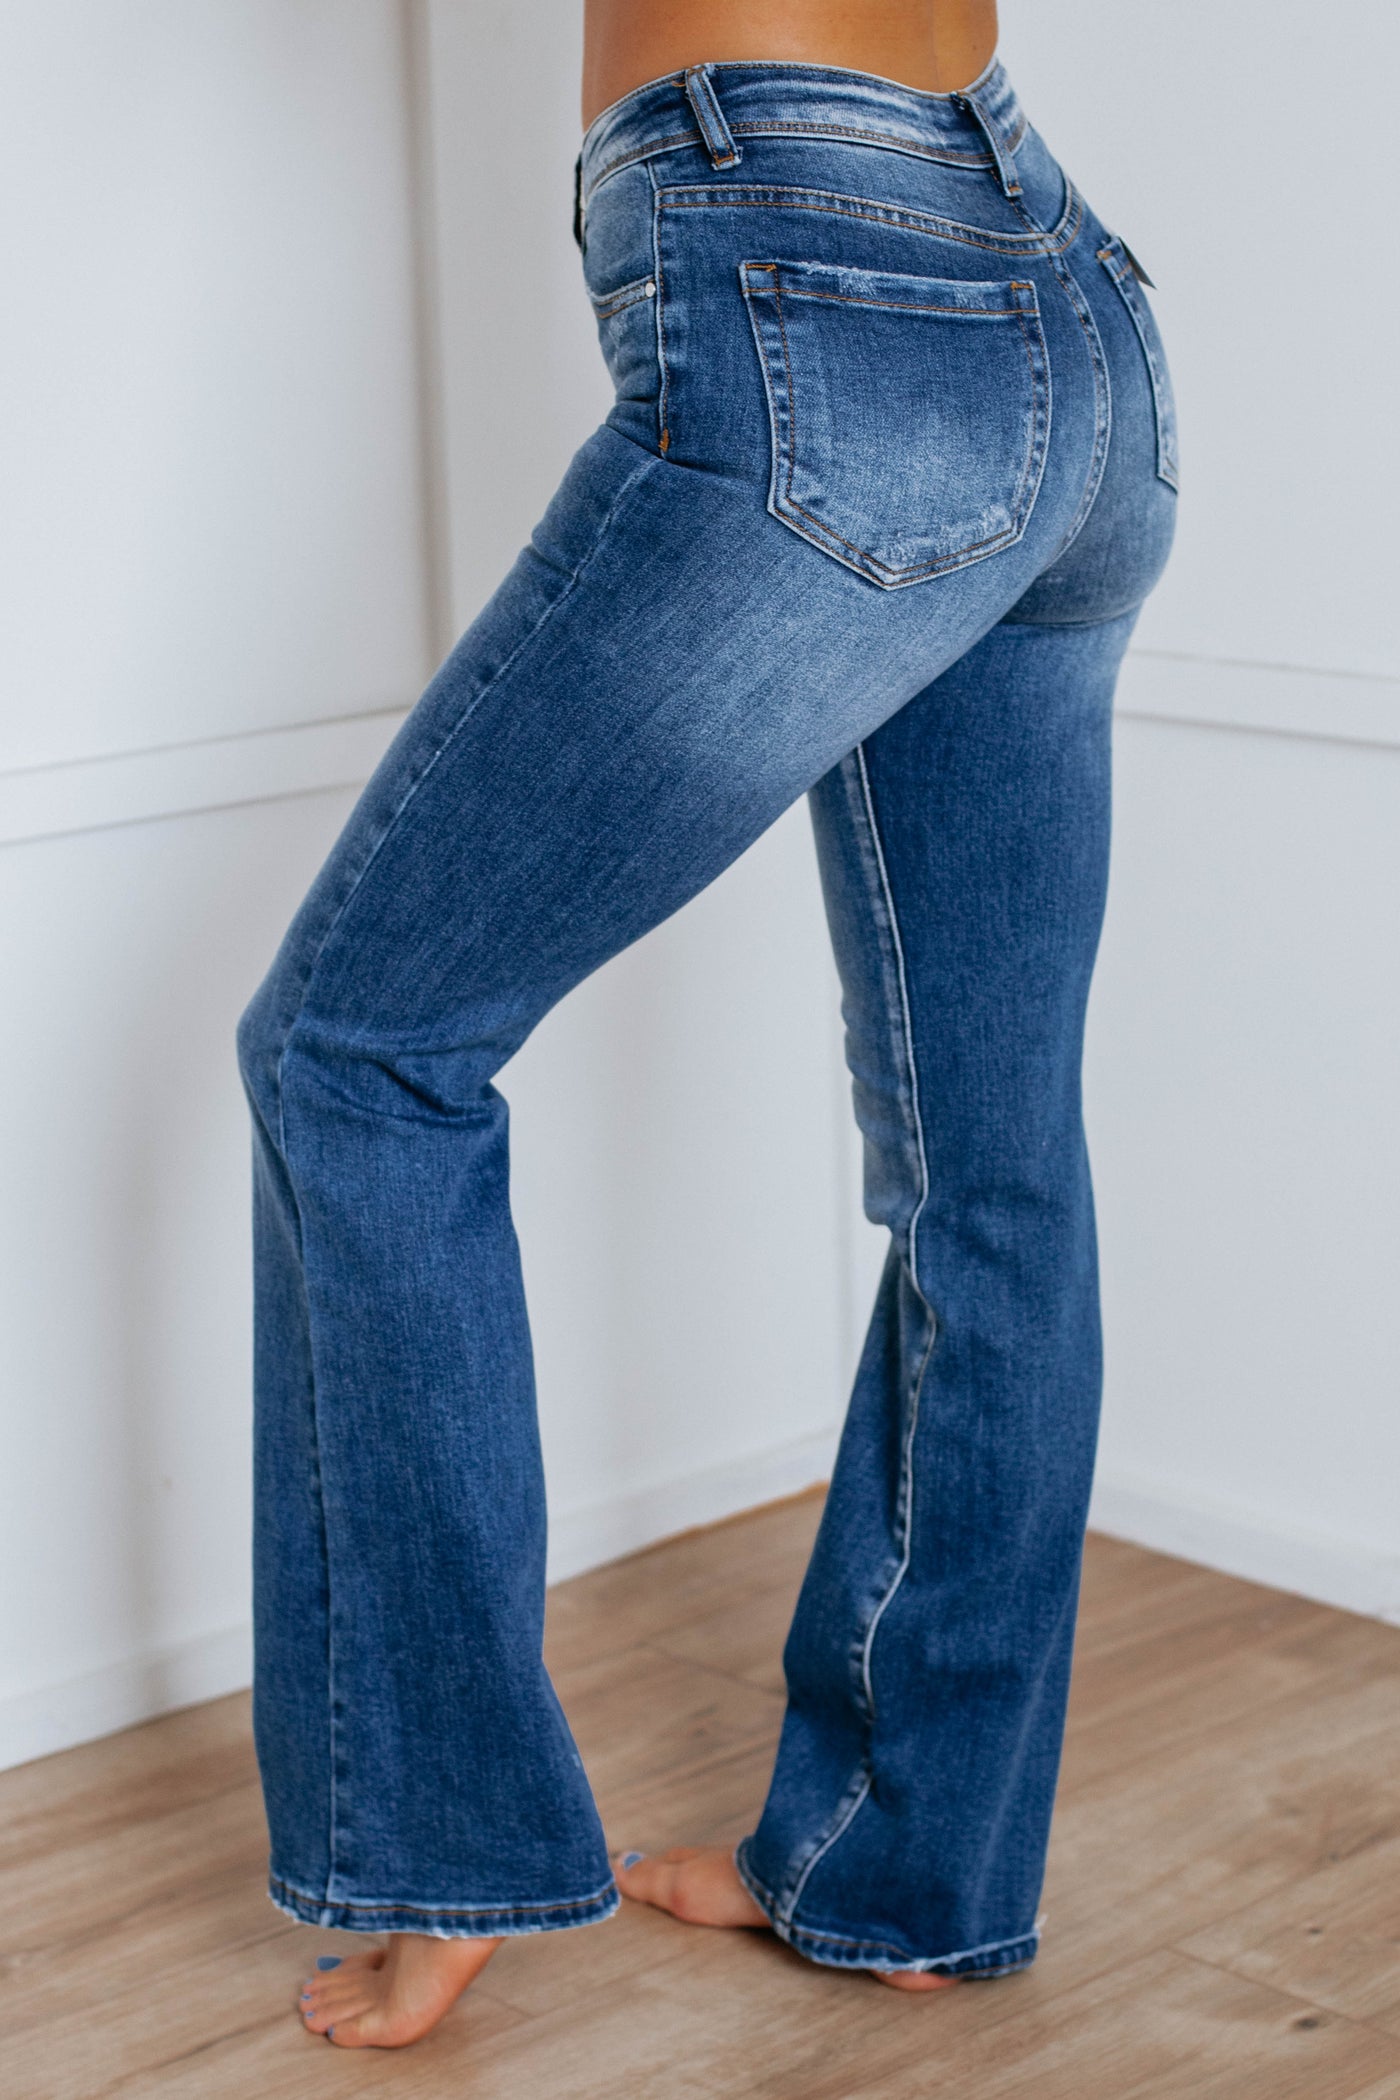 Asher Risen Jeans - Medium Wash